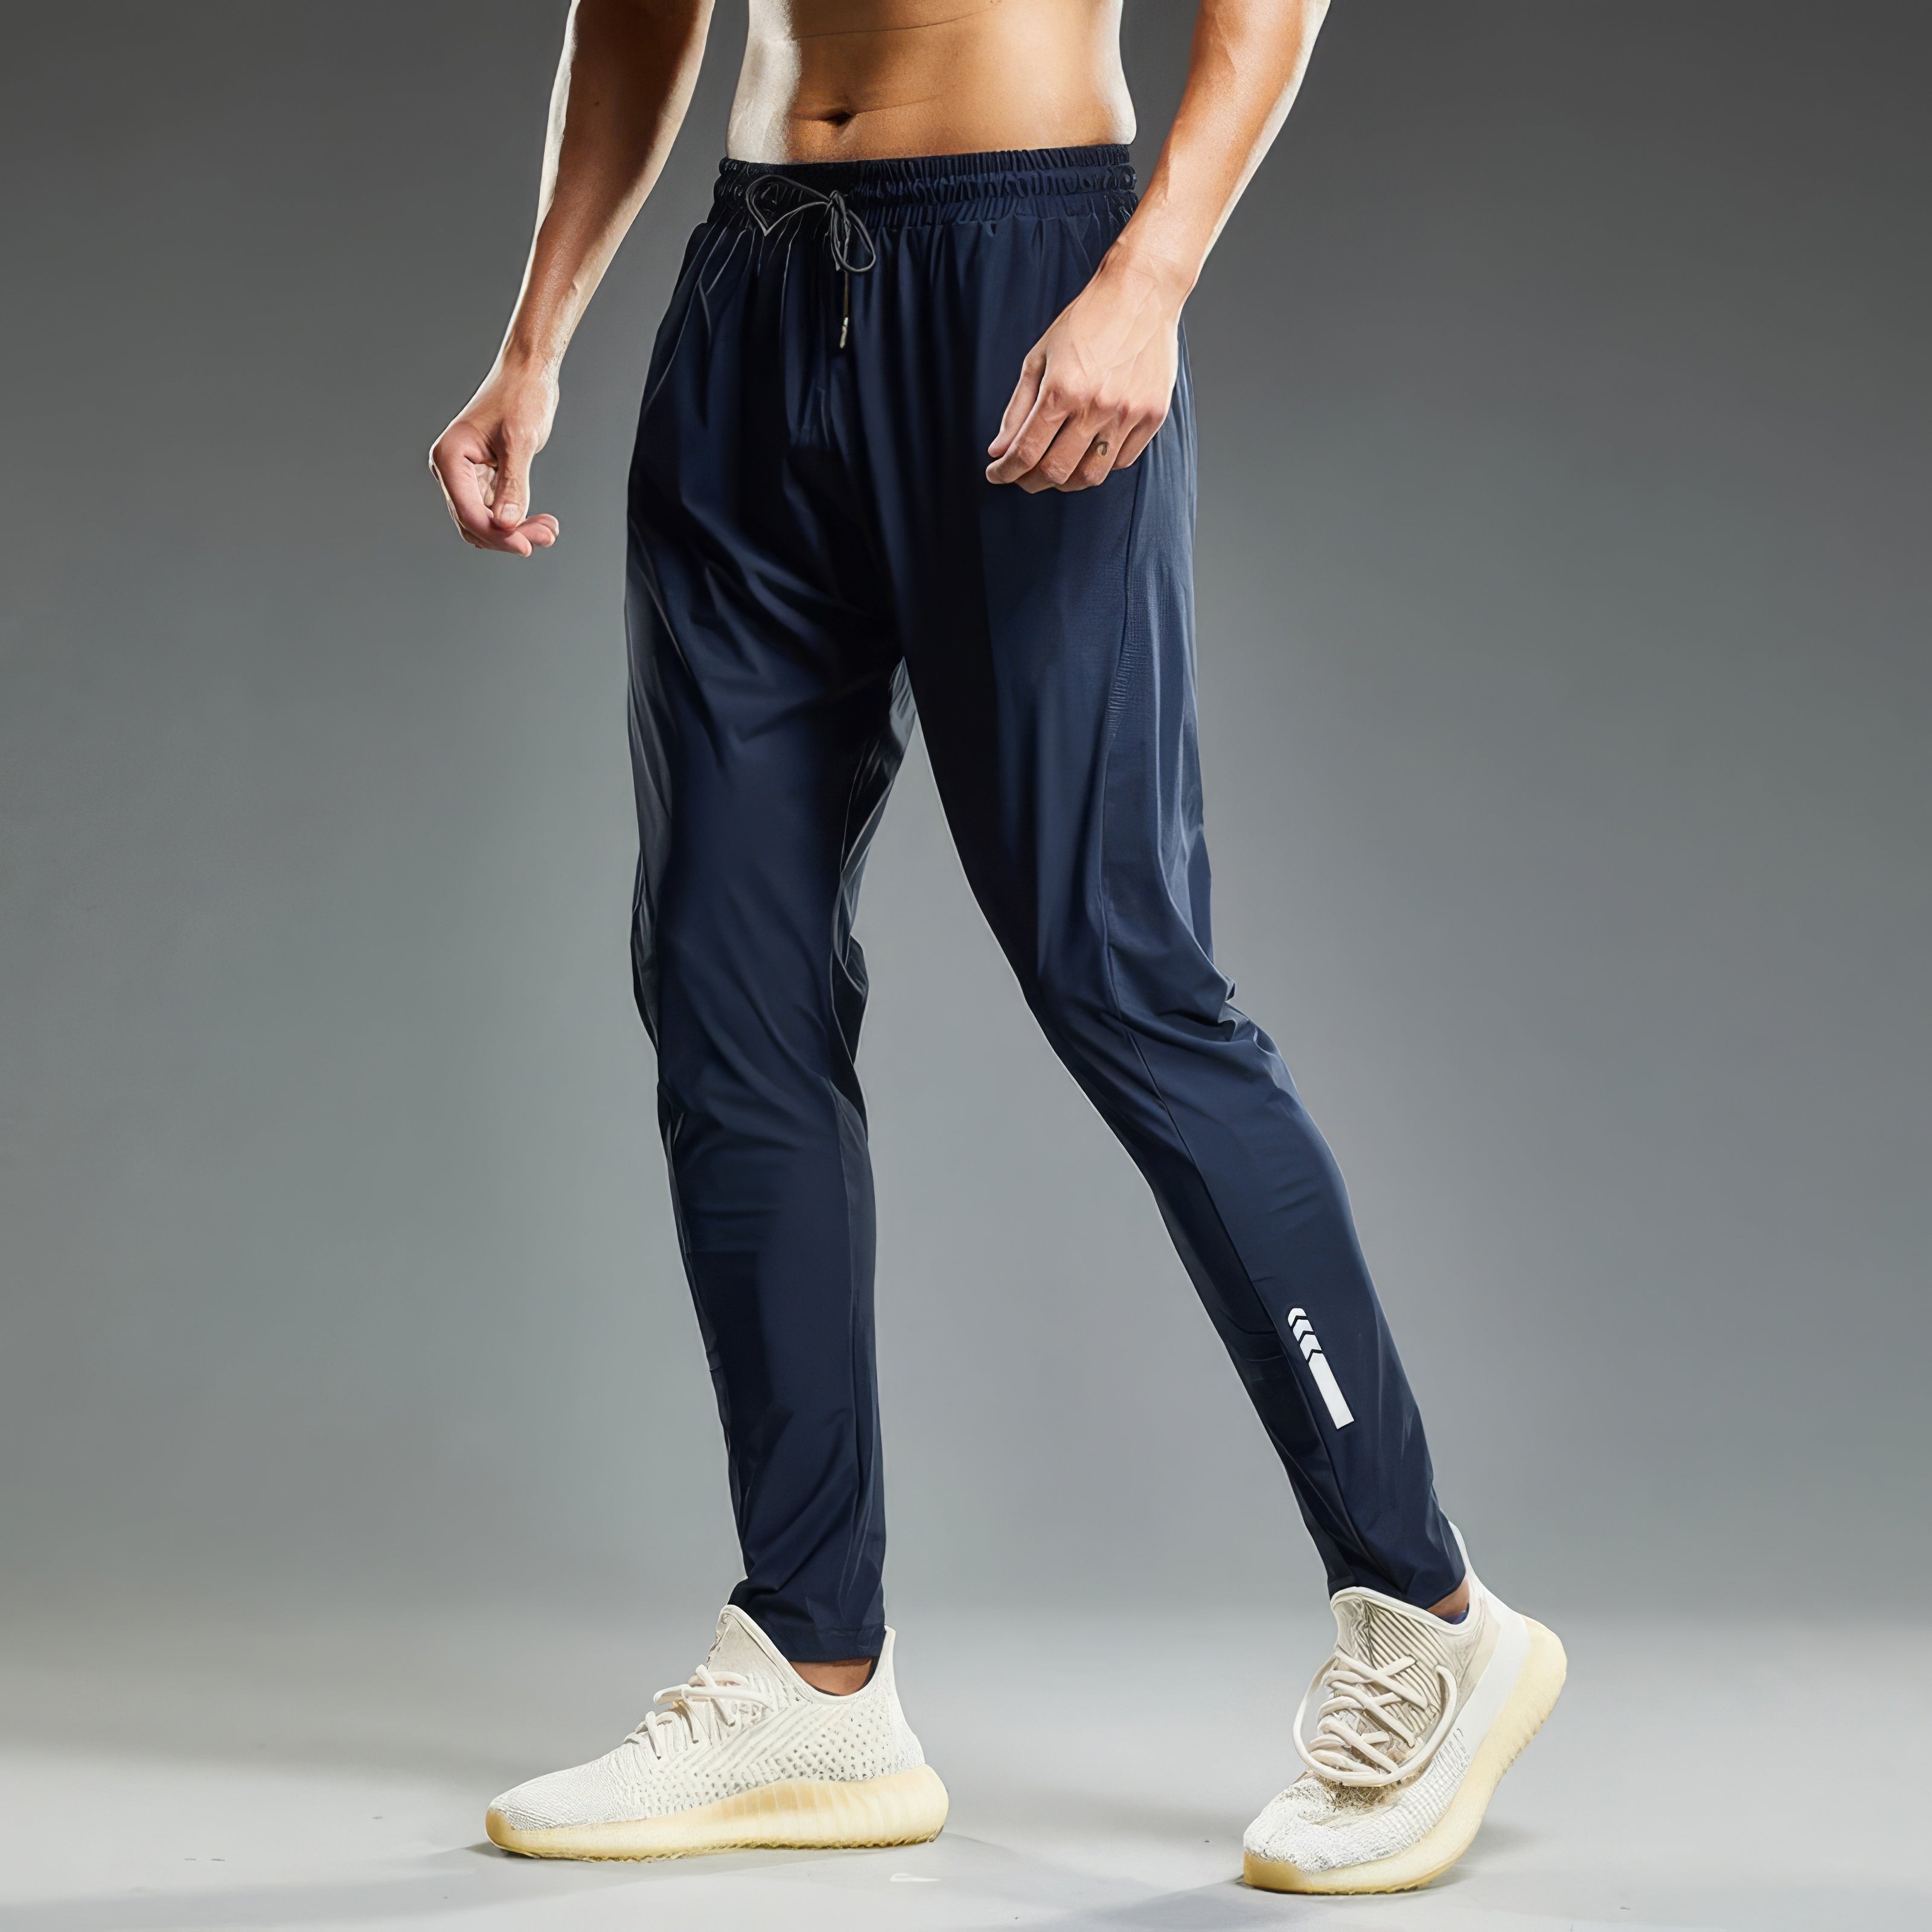 Lukas | Flexible & Comfortable Running Sports Pants